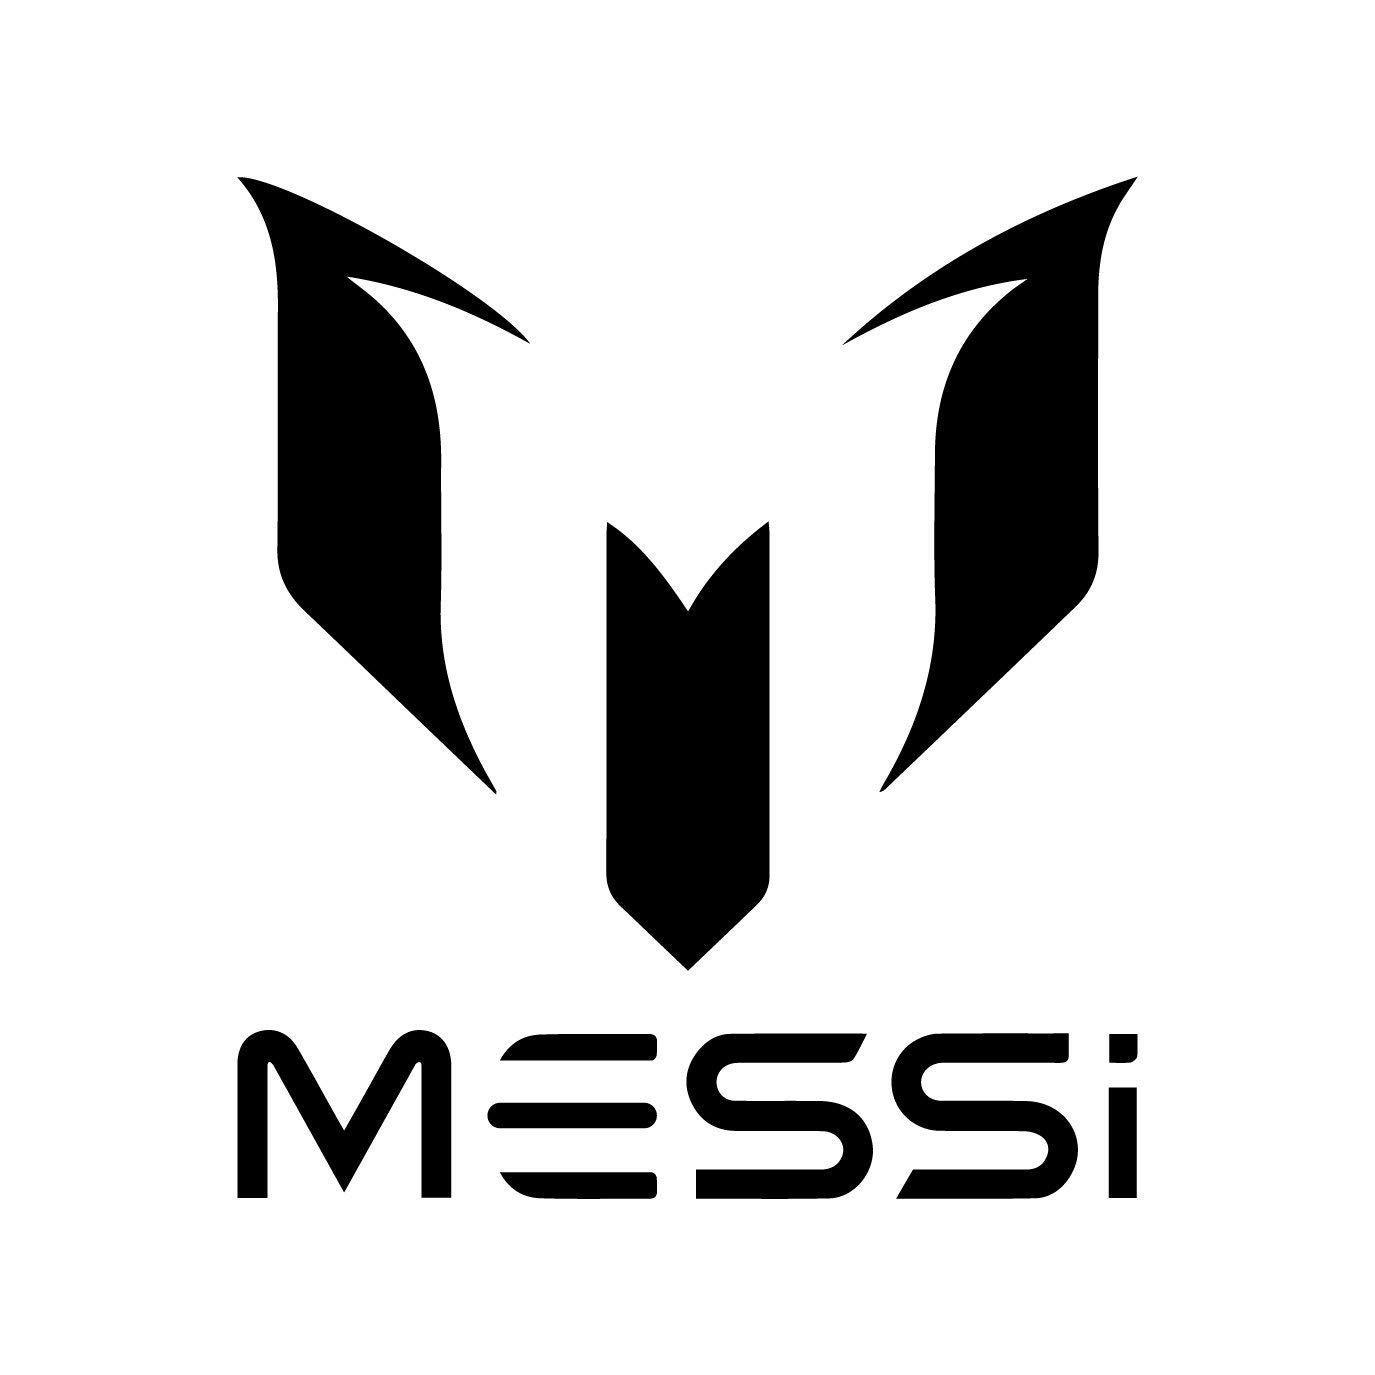 Messi Logo - Amazon.com : MESSI M10 INTERNATIONAL SUPER STAR SOCCER 5.5